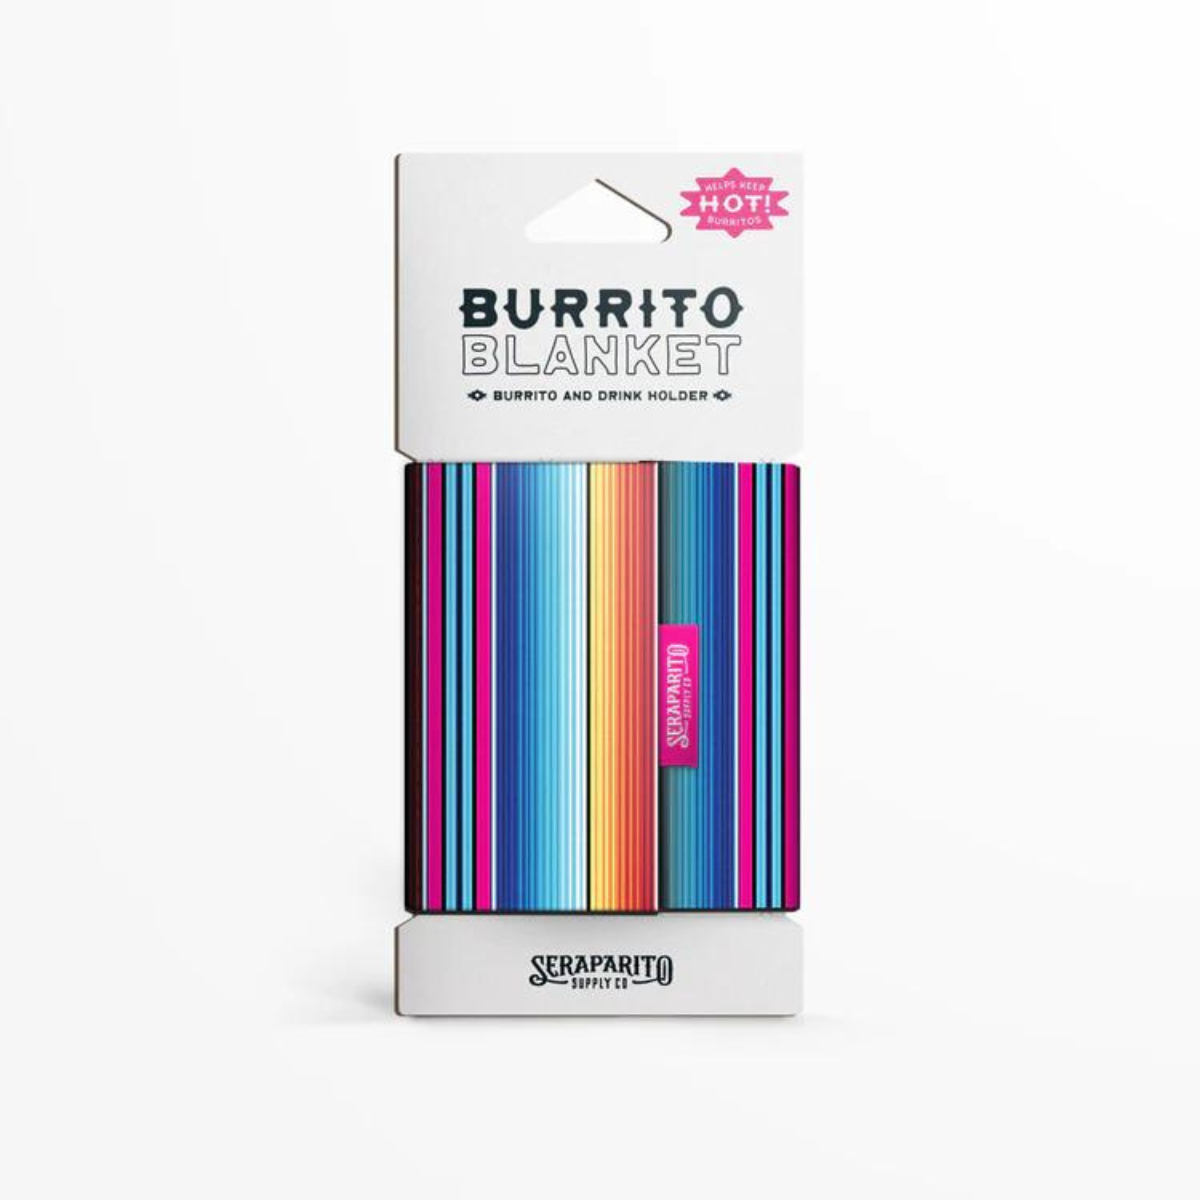 Burrito Blanket Can Cooler